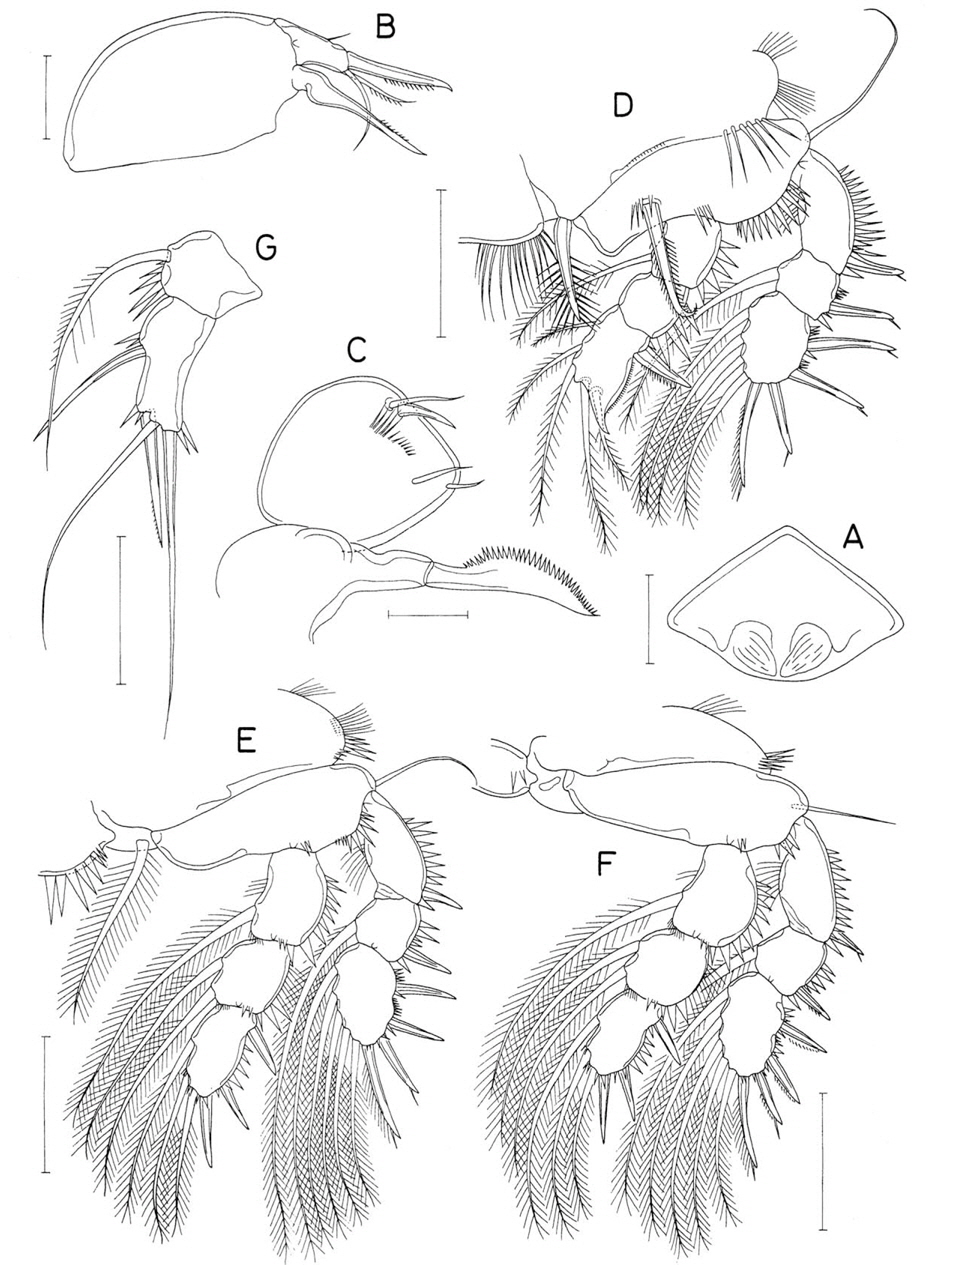 Presynaptiphilus trifurcatus n. sp., female. A, Labrum; B, Maxilla; C, Maxilliped; D, Leg 1; E, Leg 2; F, Leg 3; G, Leg 5. Scale bars: A-C=0.02 mm, D-G=0.05 mm.